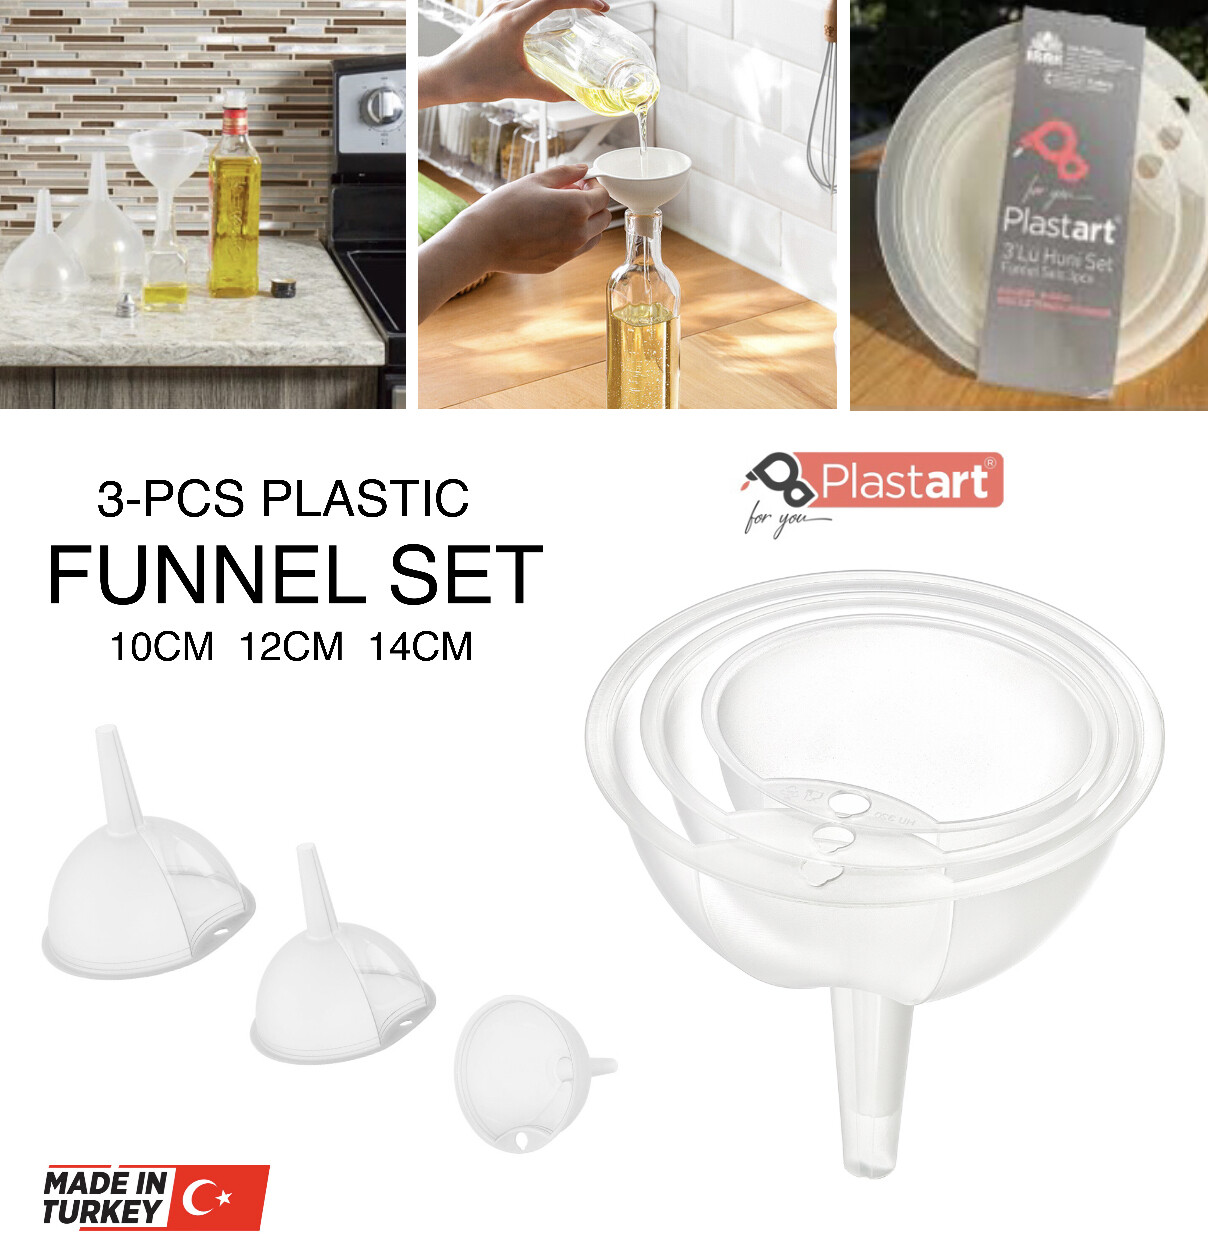 3-Pcs Funnel Set